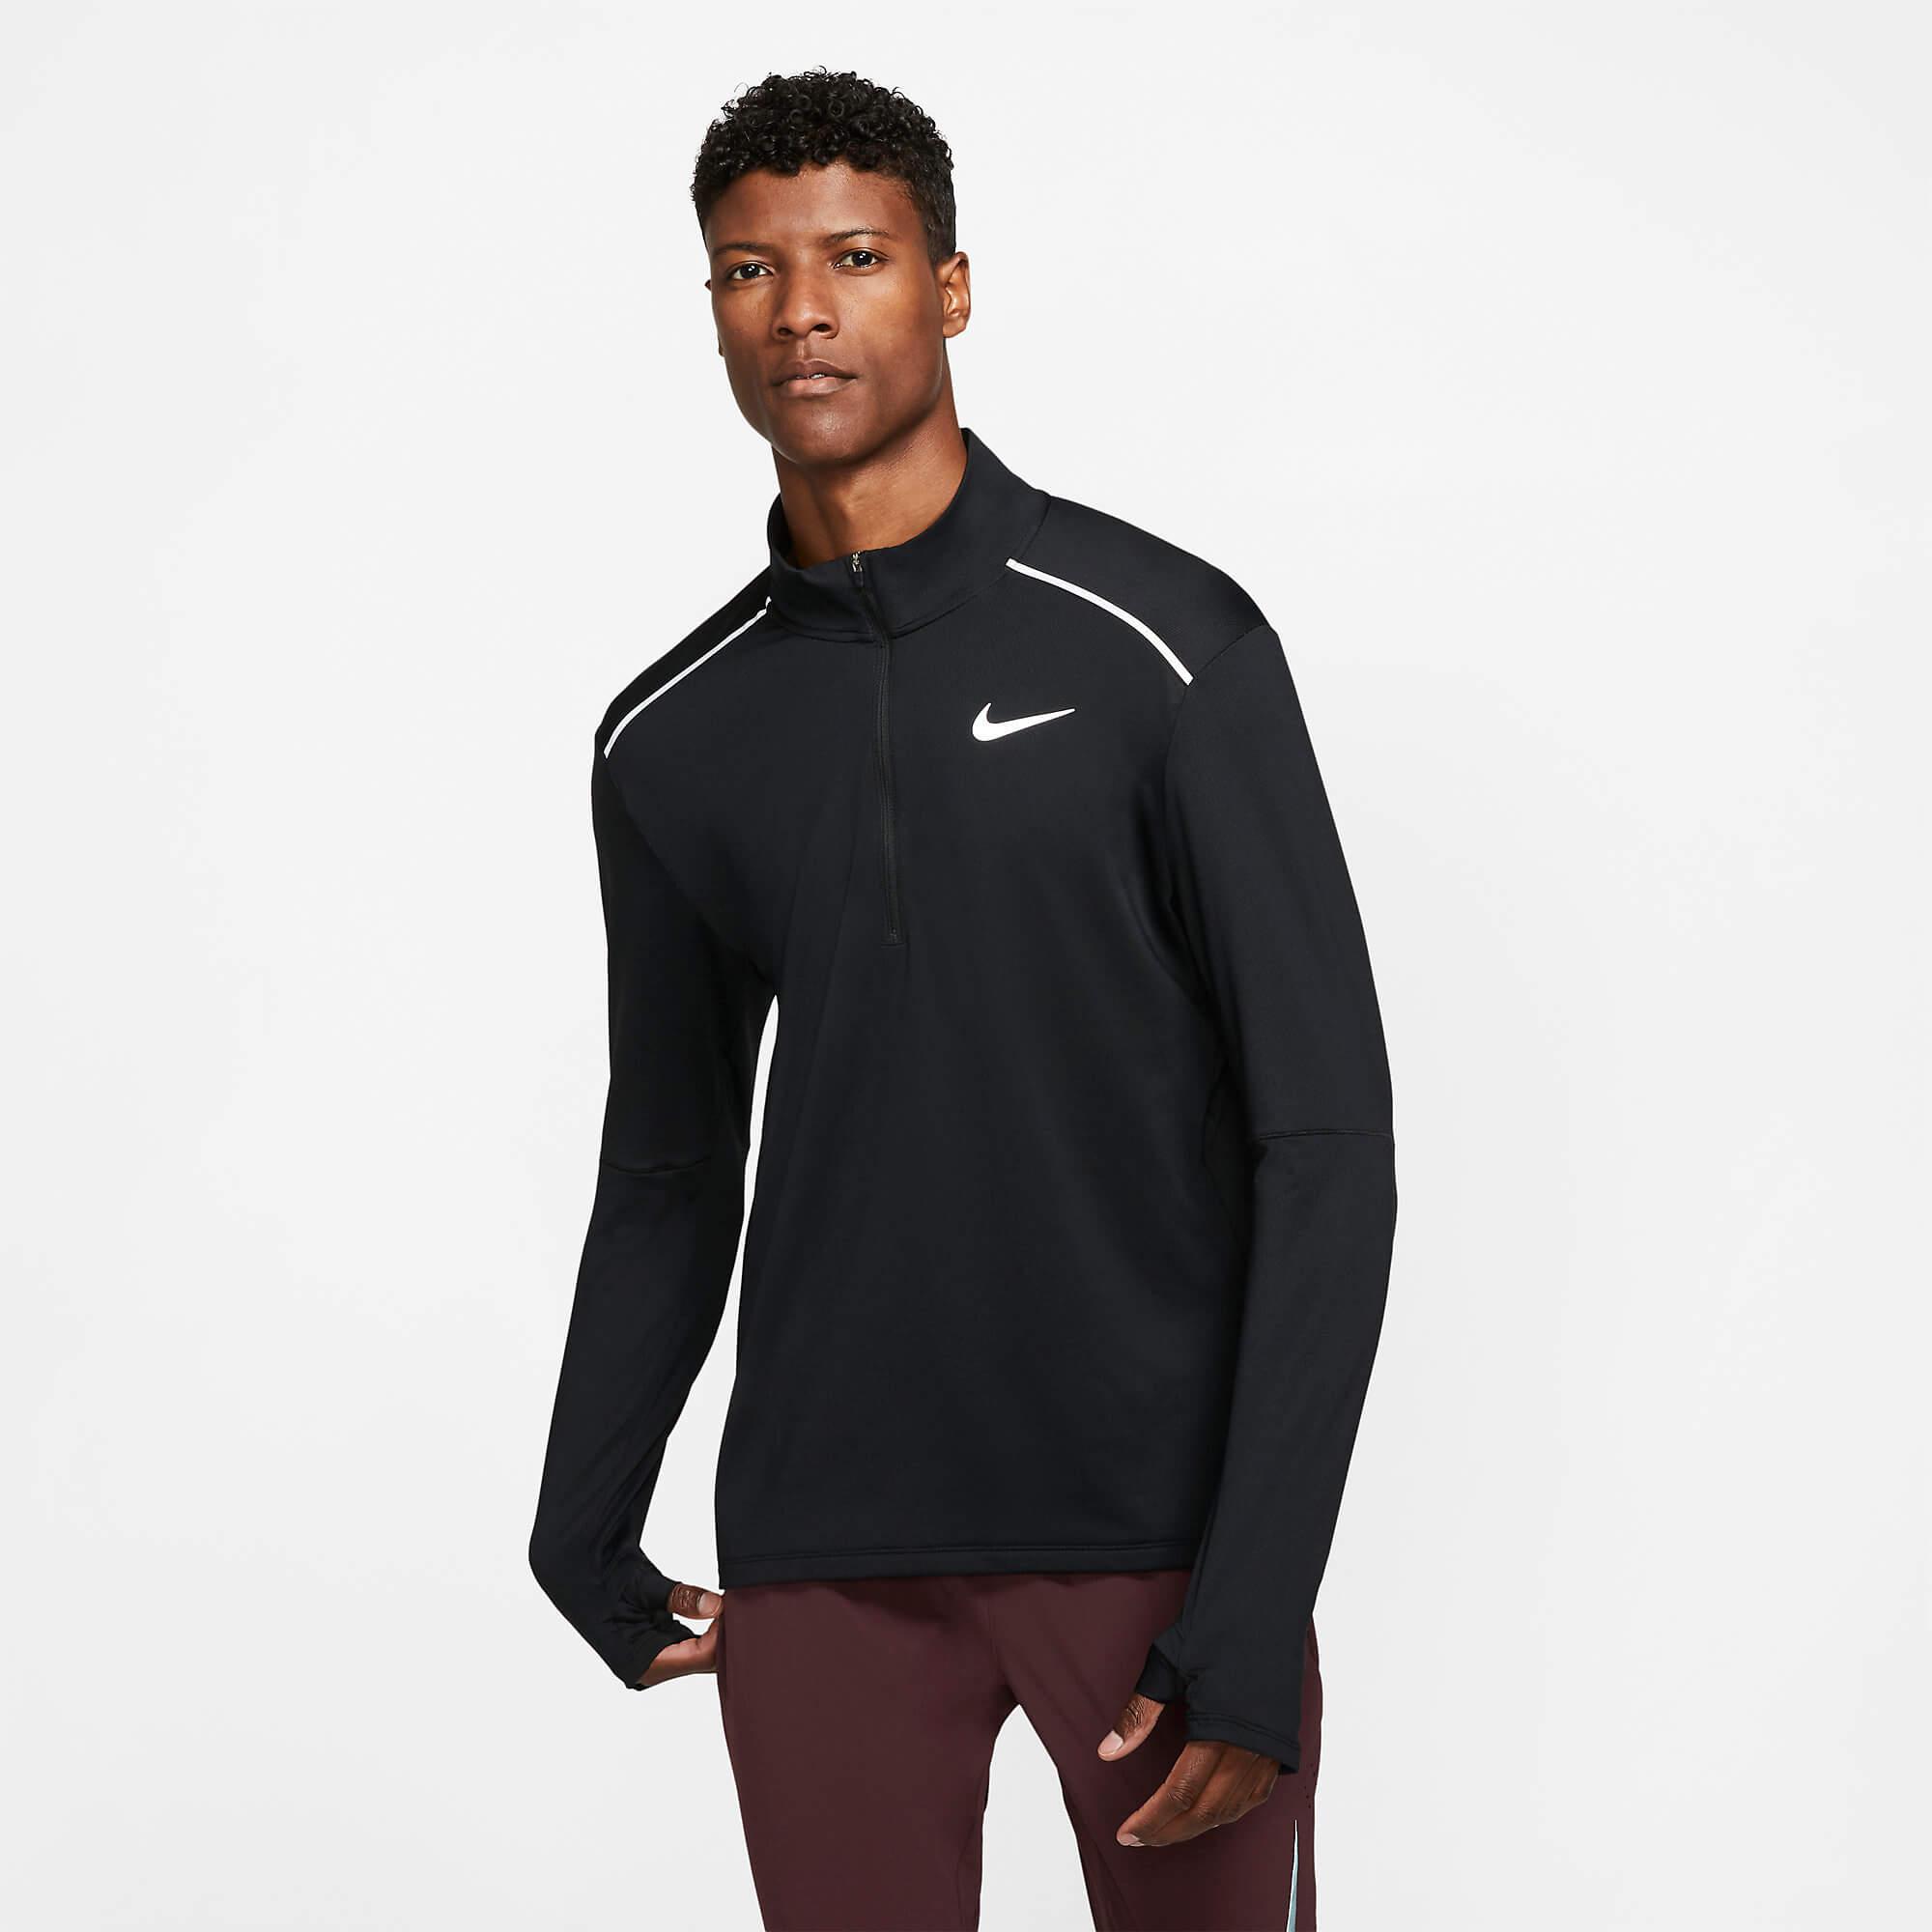 Nike Mens Half Zip Running Top - Black - Tennisnuts.com